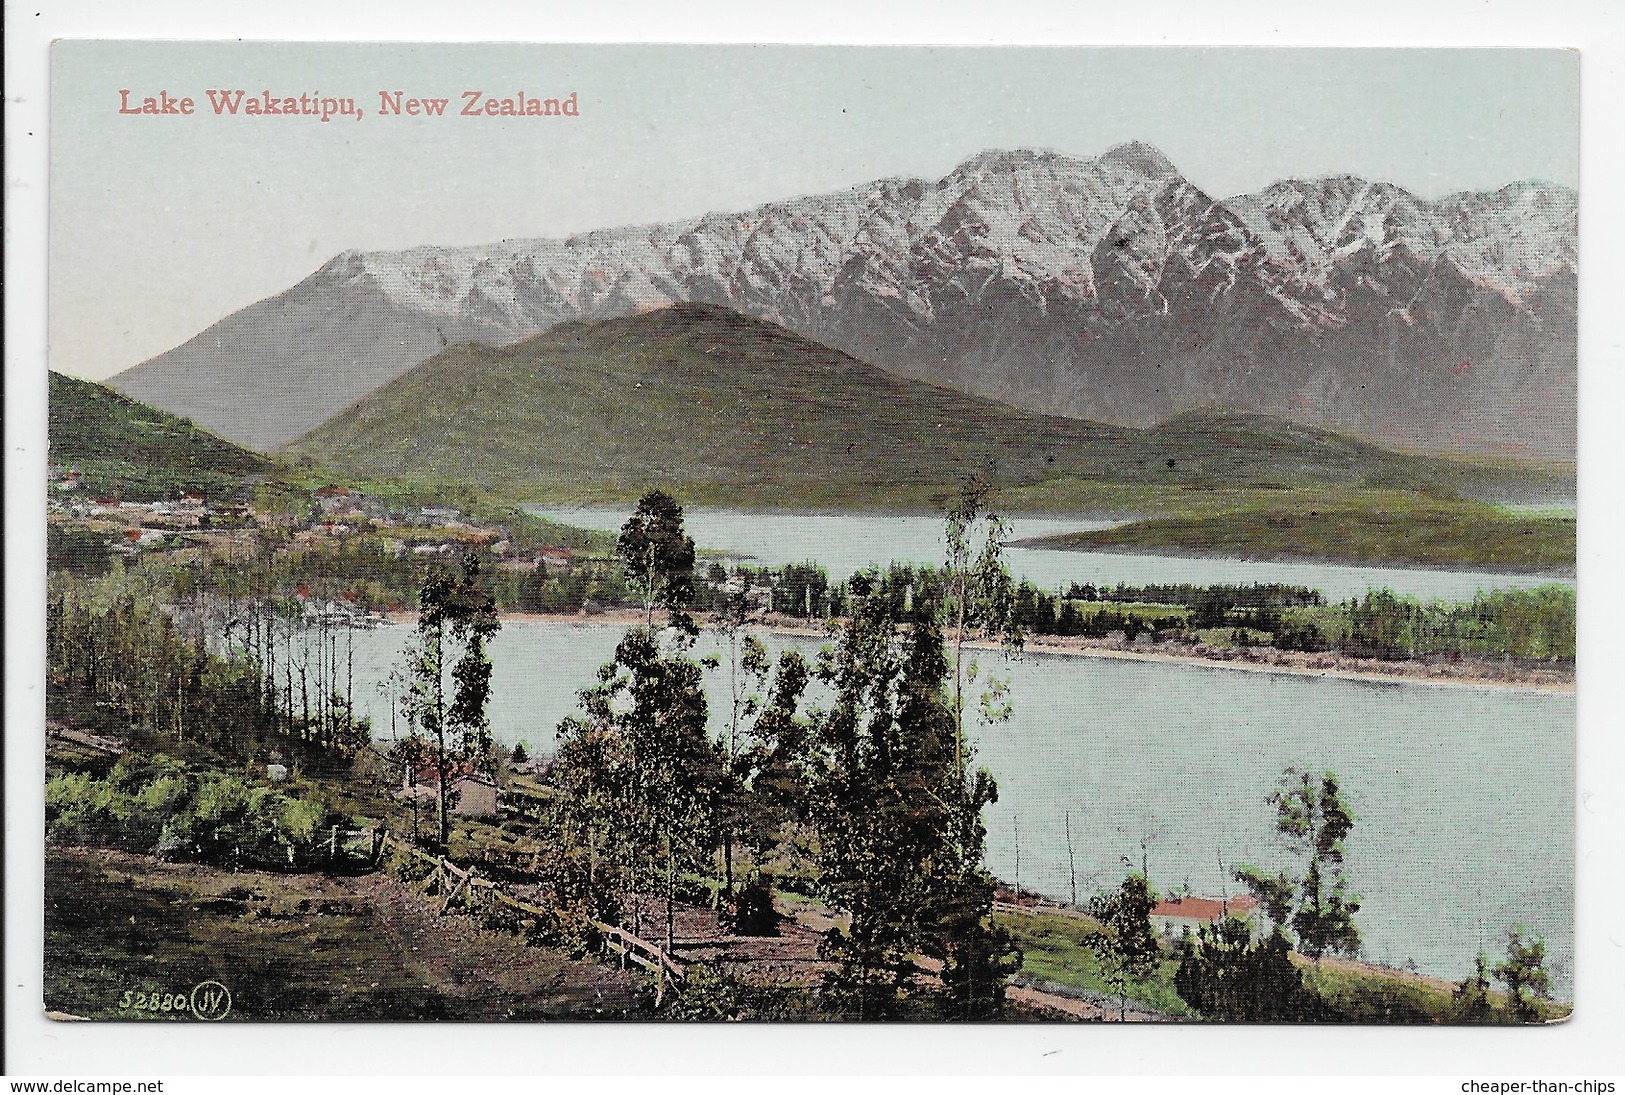 Lake Wakatipu, New Zealand - Valentine 52880 - New Zealand